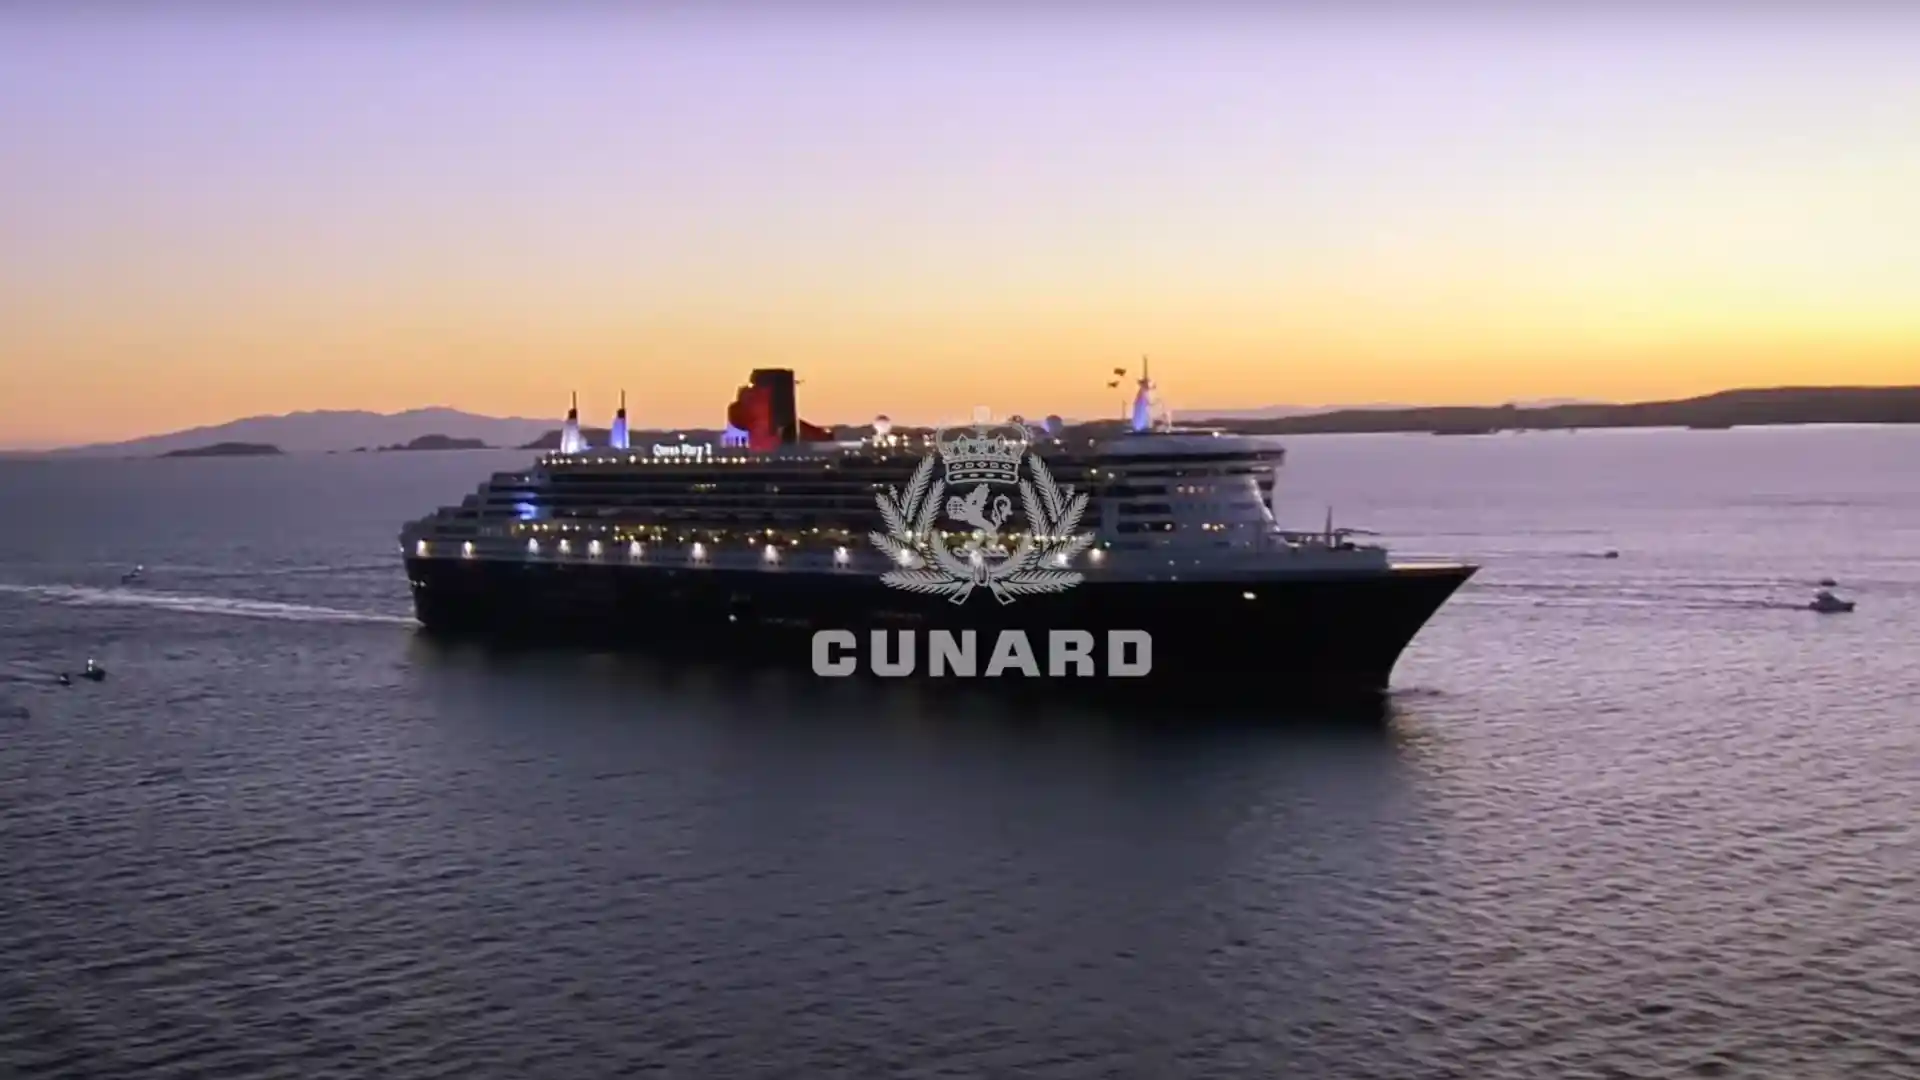 Cunard world cruise video thumbnail